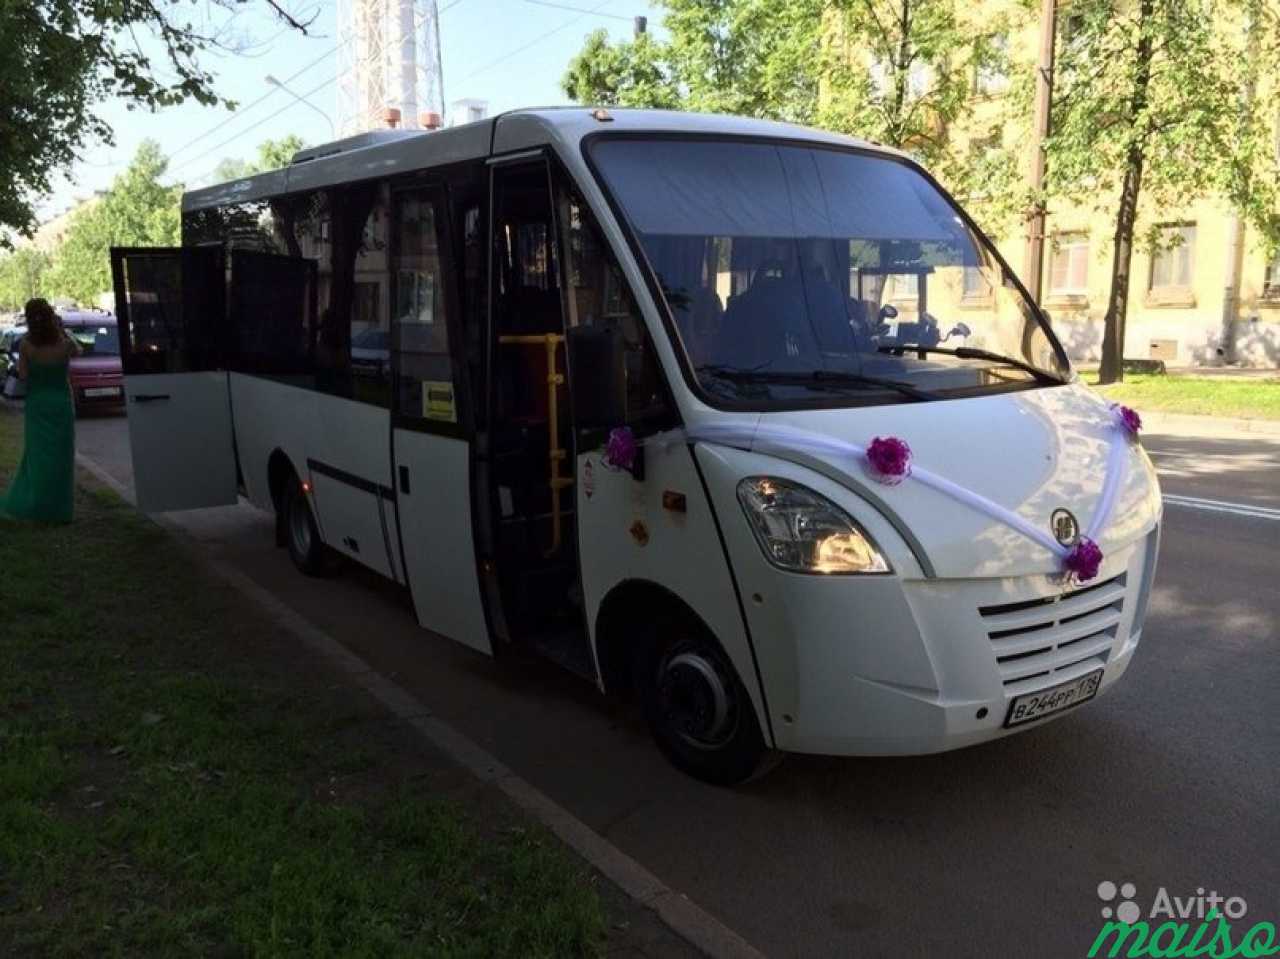 Заказ автобуса на 30 мест и 20 мест в Санкт-Петербурге. Фото 1